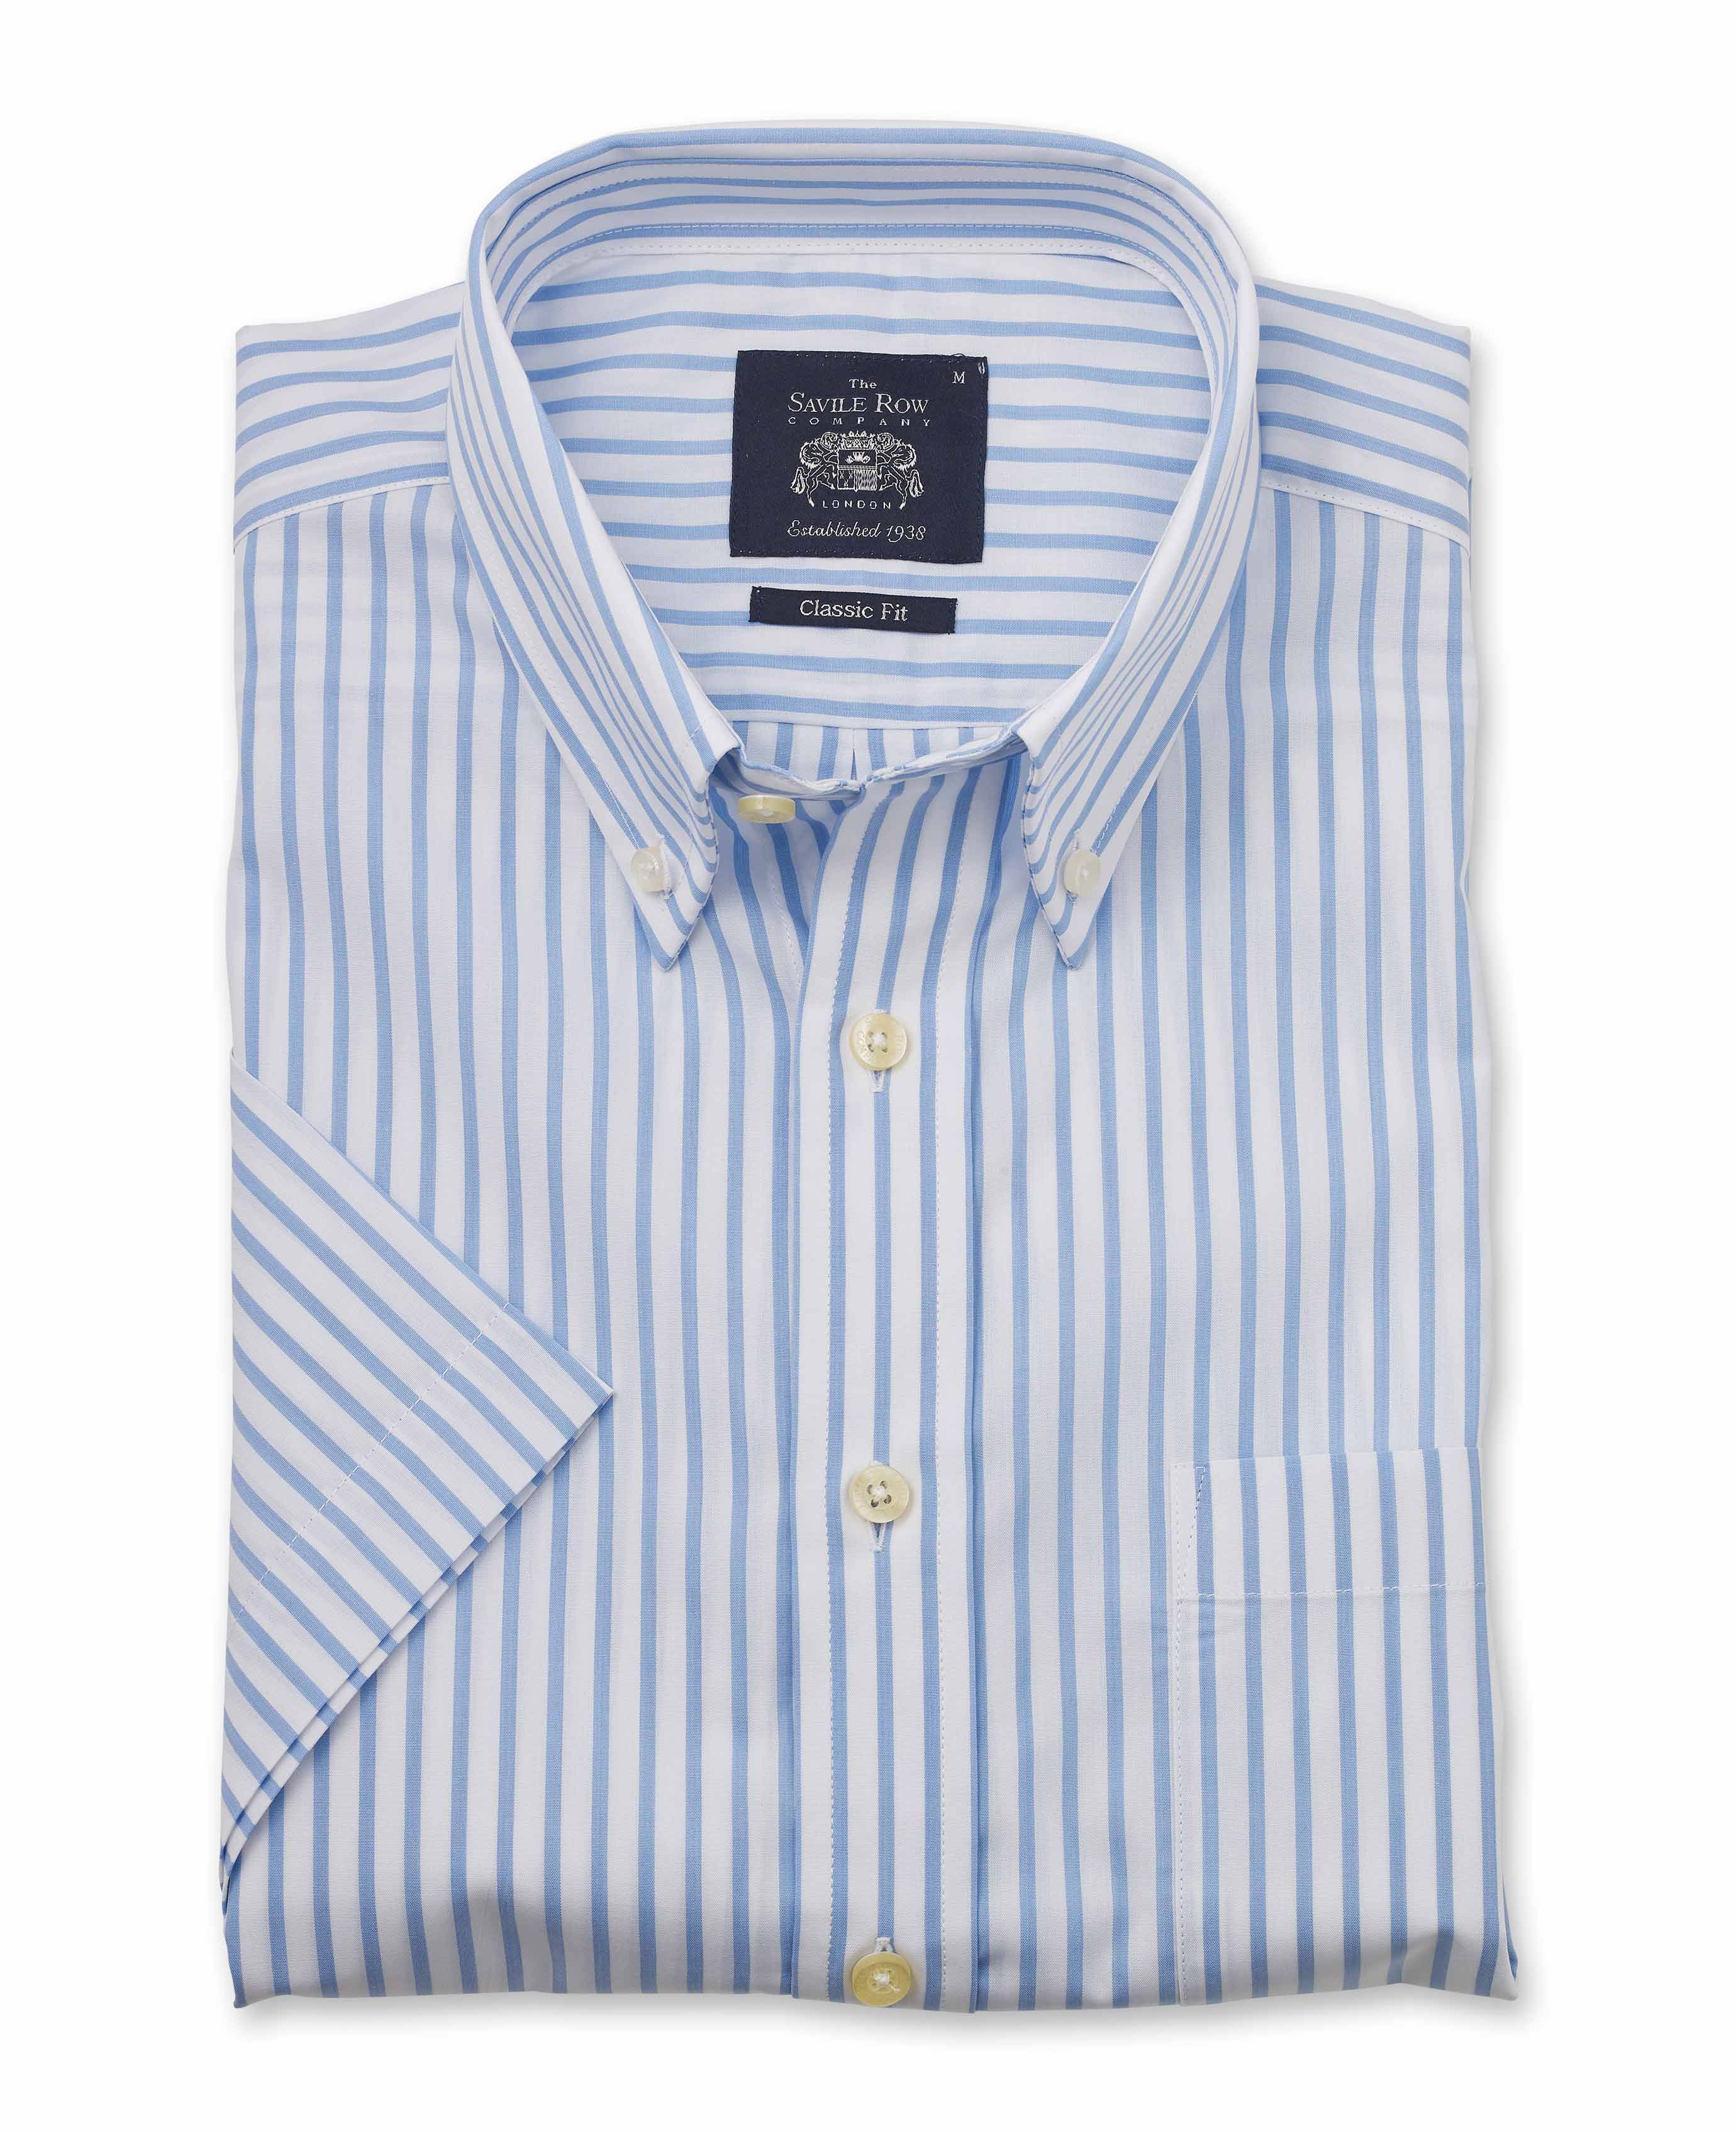 White & Sky Blue Stripe Classic Fit Short Sleeve Shirt | Savile Row Co